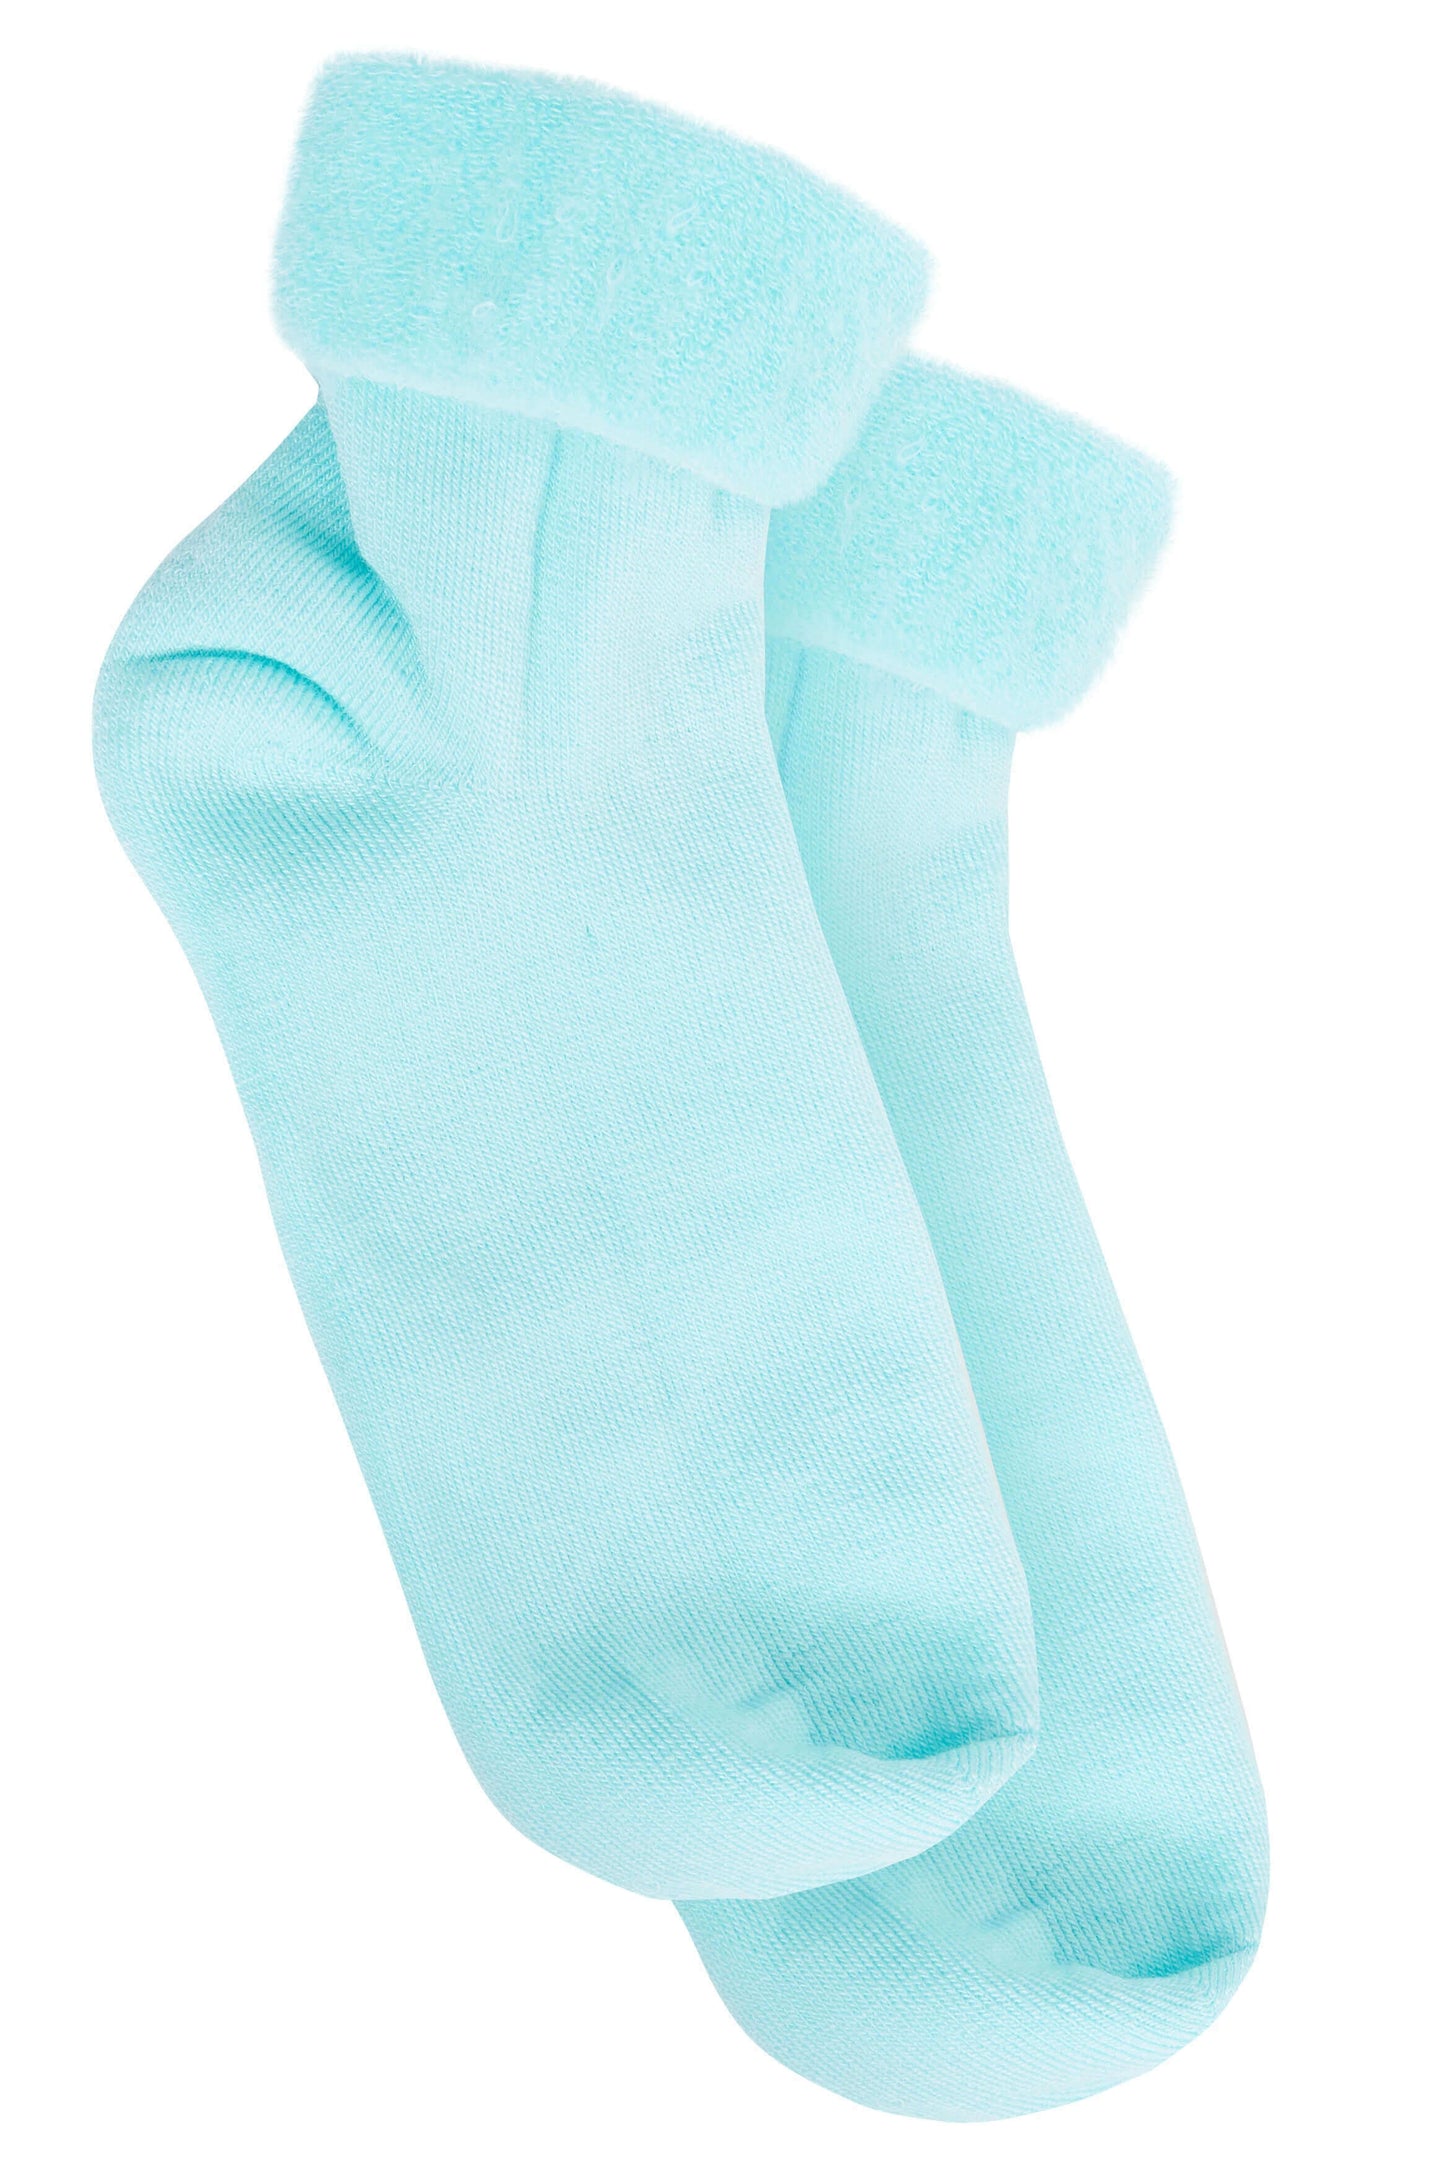 Pack Of 6 Women's Bed Socks Thermal Super Soft Slipper Socks Winter. Buy now for £12.00. A Socks by Sock Stack. 4-7, aqua, assorted, blue, blush pink, boot socks, christmas, cosy, cream, designer, fluffy, fluffy pink, footwear, girls, girls socks, green,